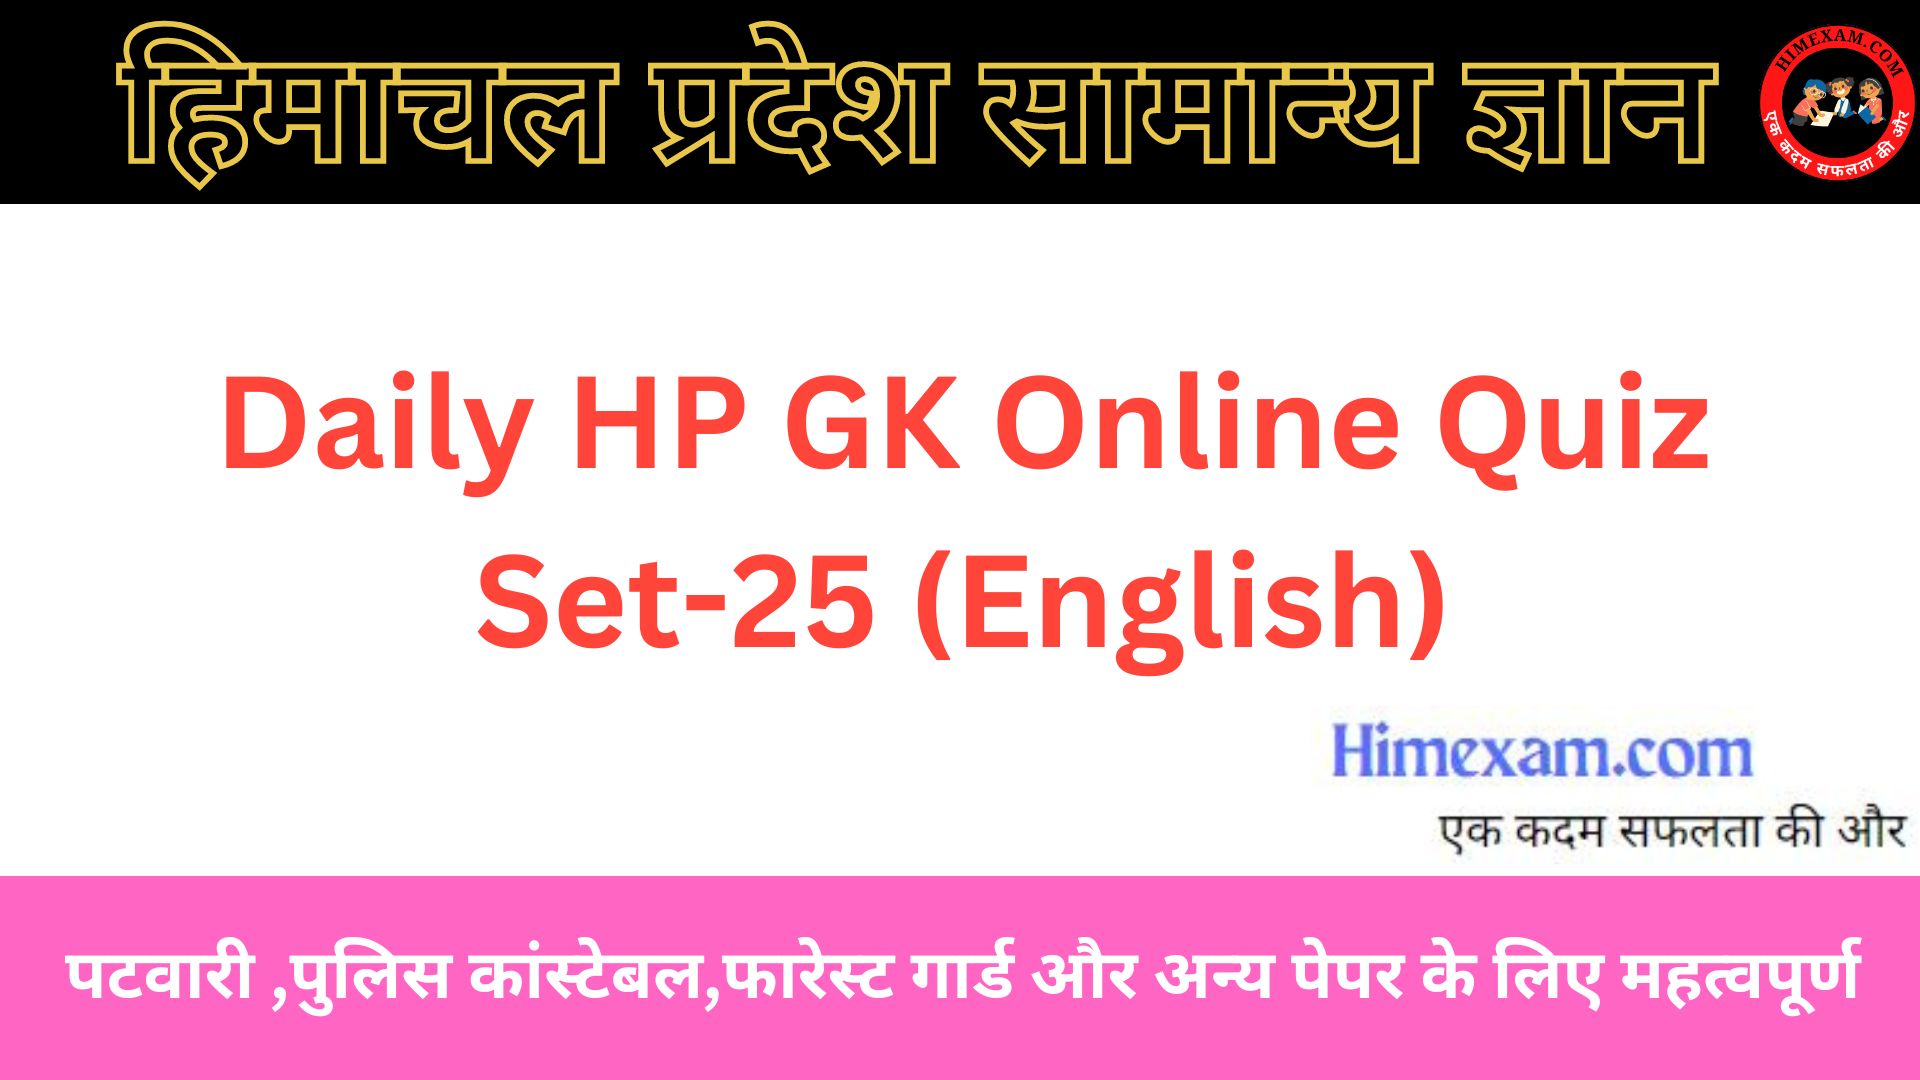 Daily HP GK Online Quiz Set-25 (English)